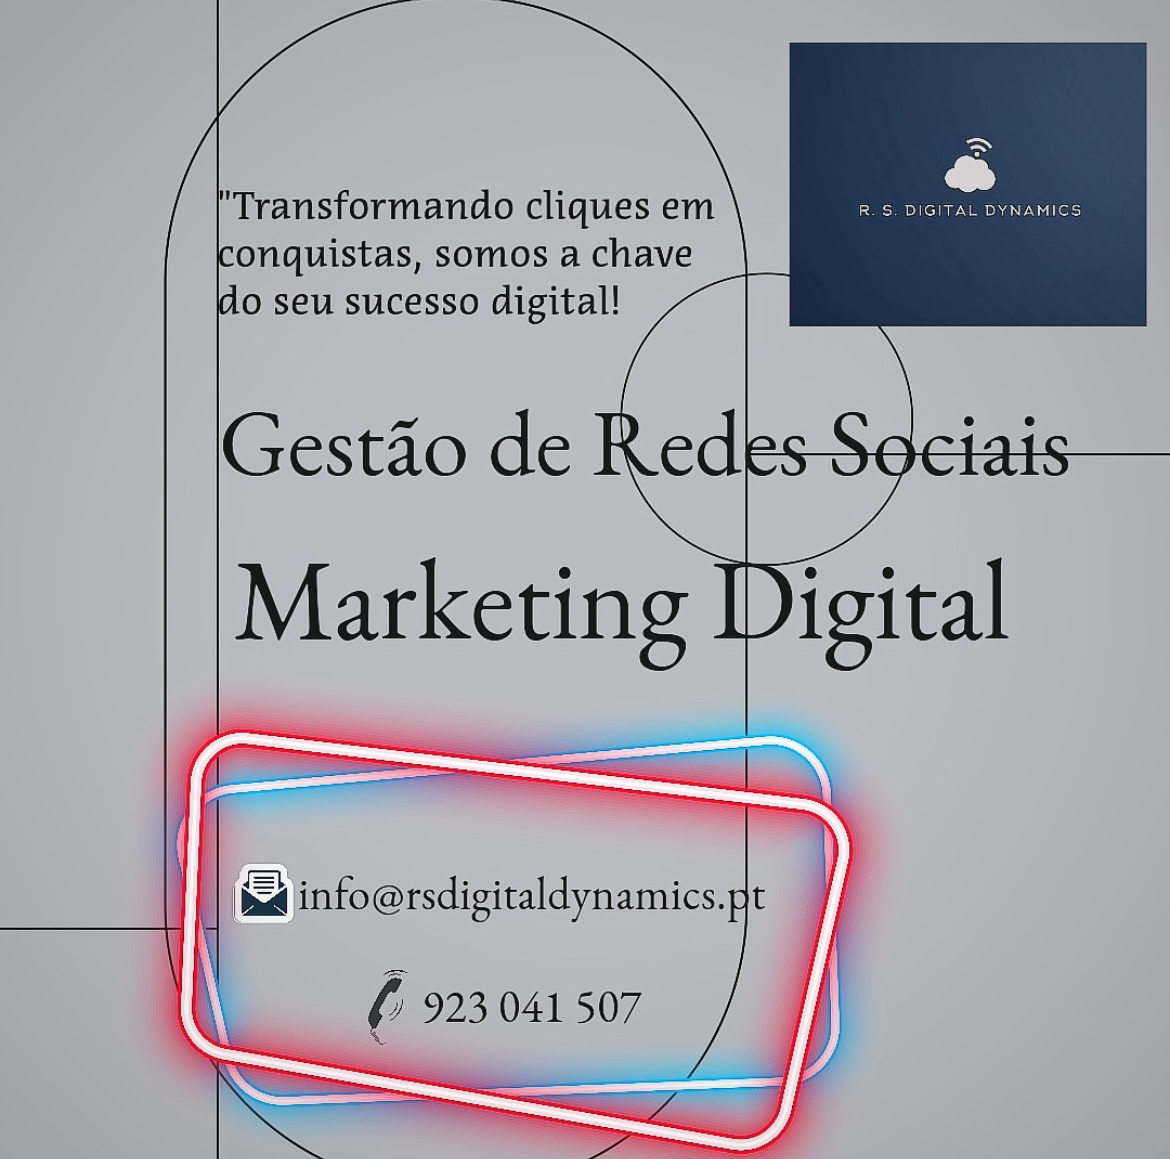 R.S. Digital Dynamics - Viana do Castelo - Marketing